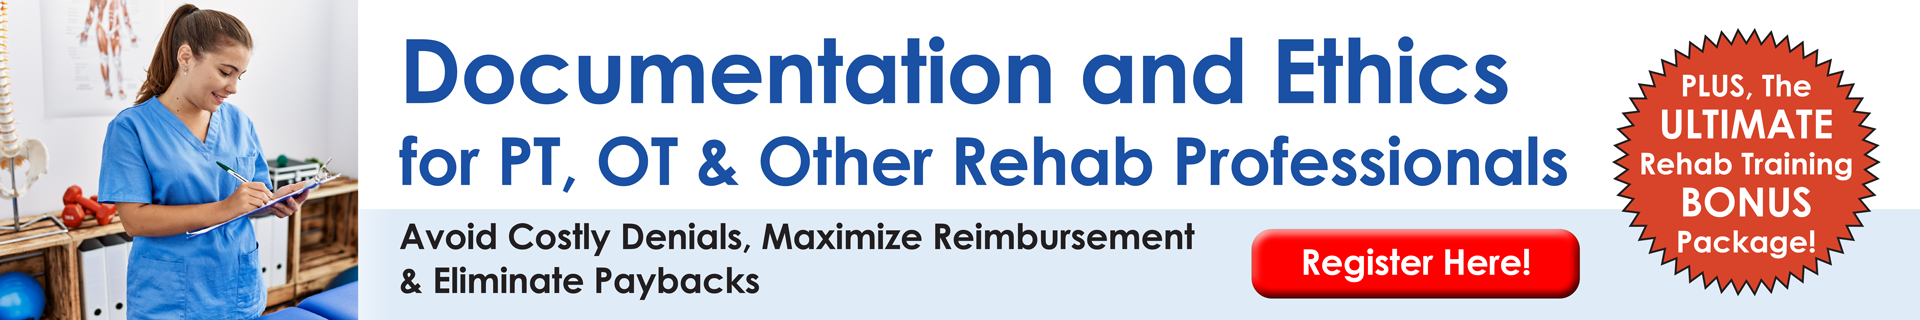 Documentation and Ethics for PT, OT & Other Rehab Professionals: Avoid Costly Denials, Maximize Reimbursement & Eliminate Paybacks